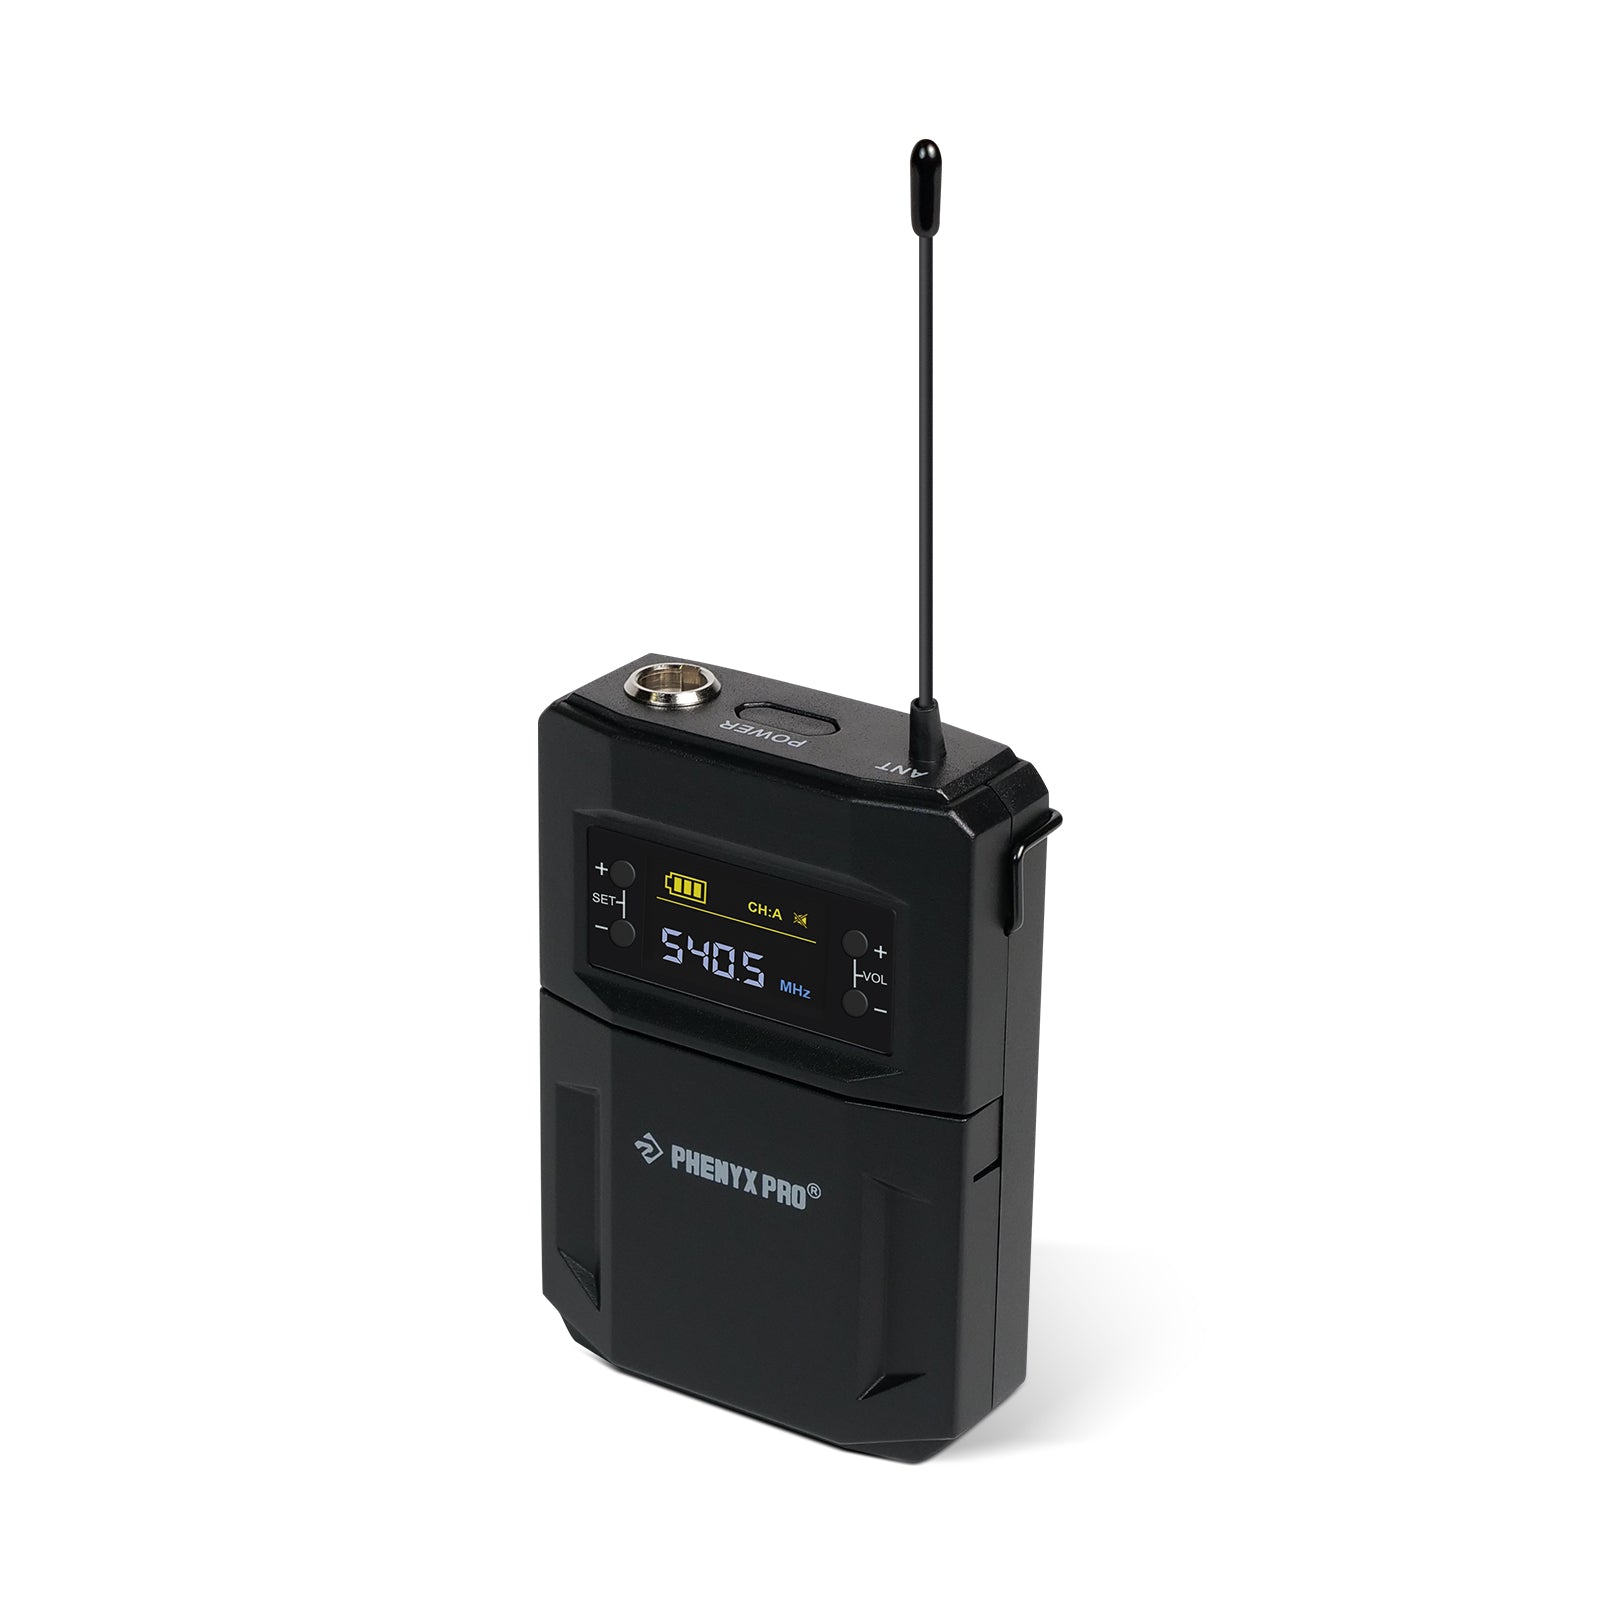 PTU-5200-2H2B | Quad Wireless Microphone System w/ Frequency Hopping